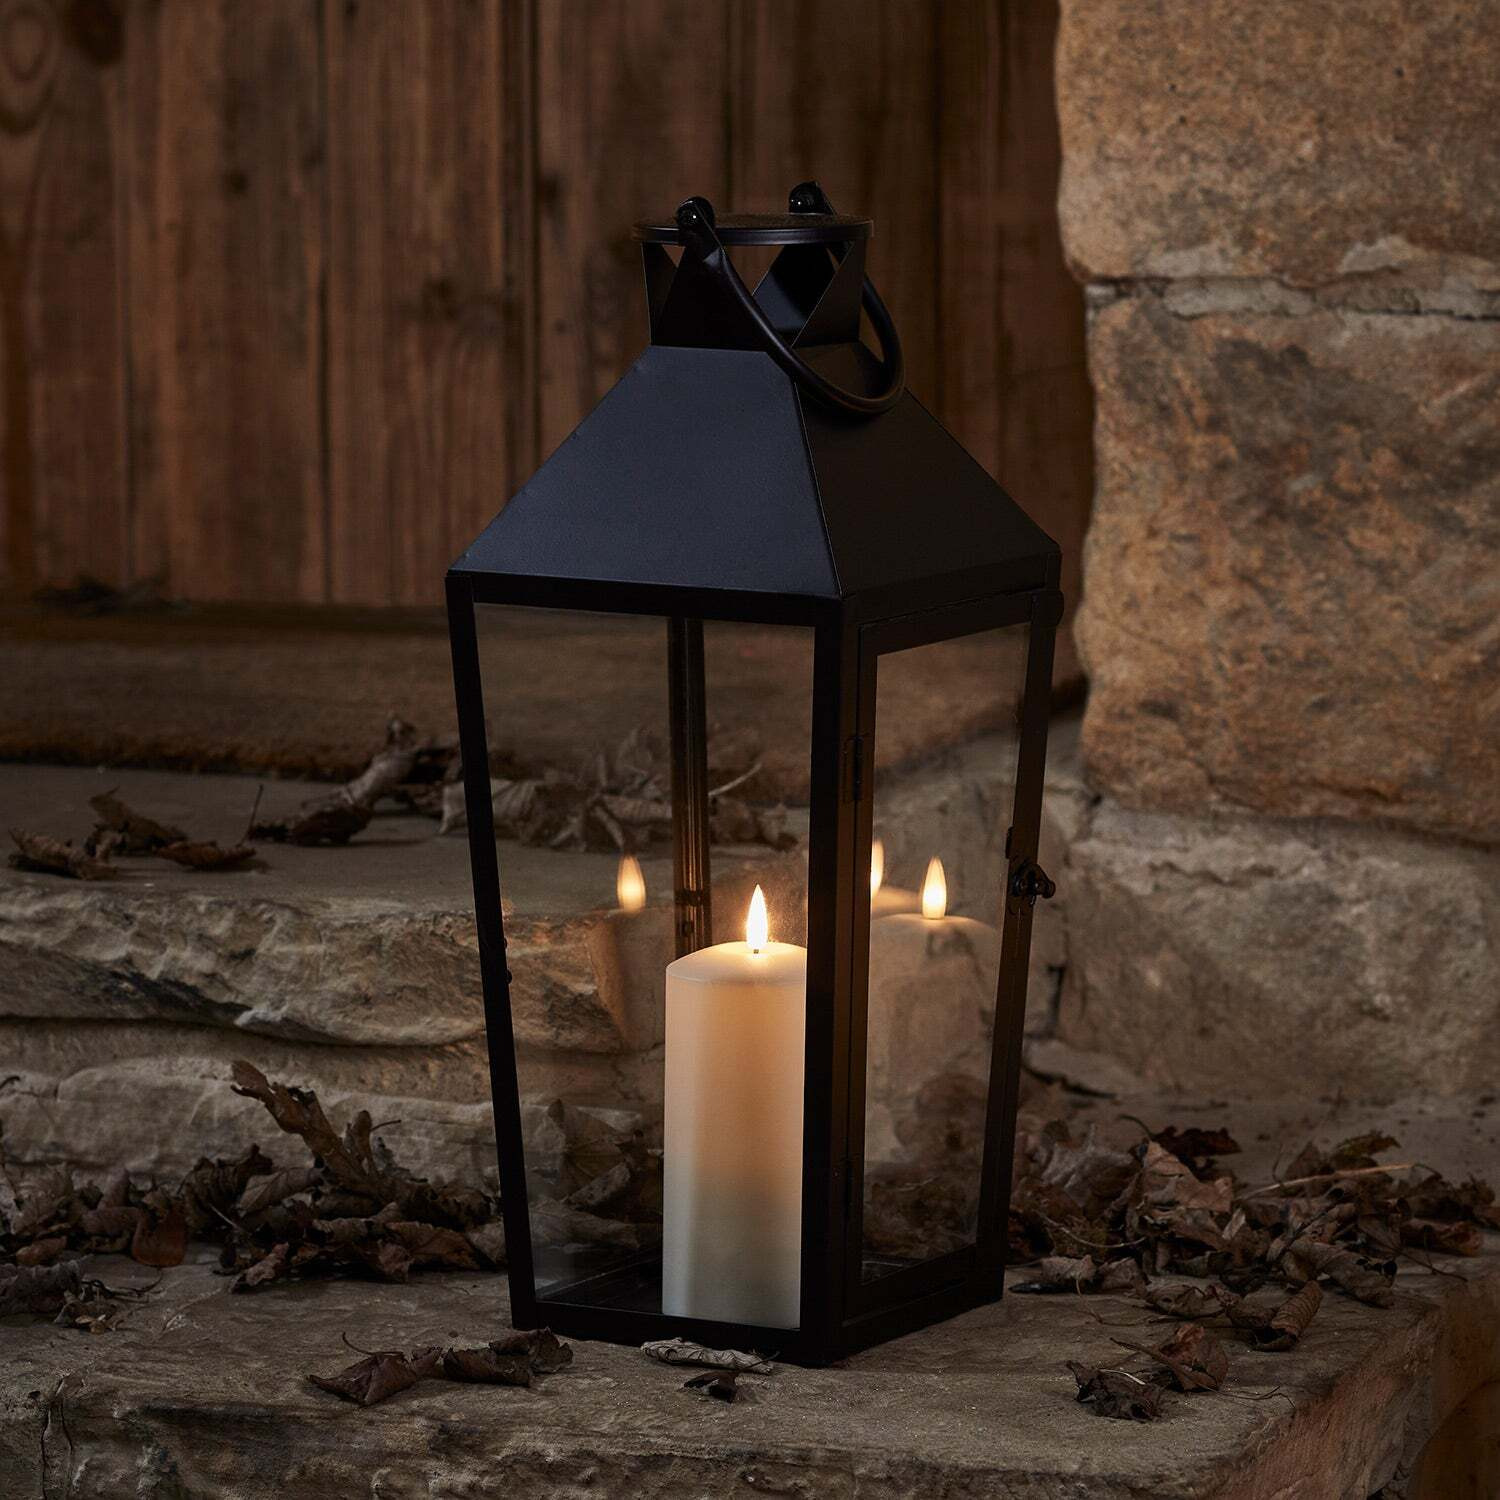 Cairns Medium Black Garden Lantern with TruGlow® Candle - image 1